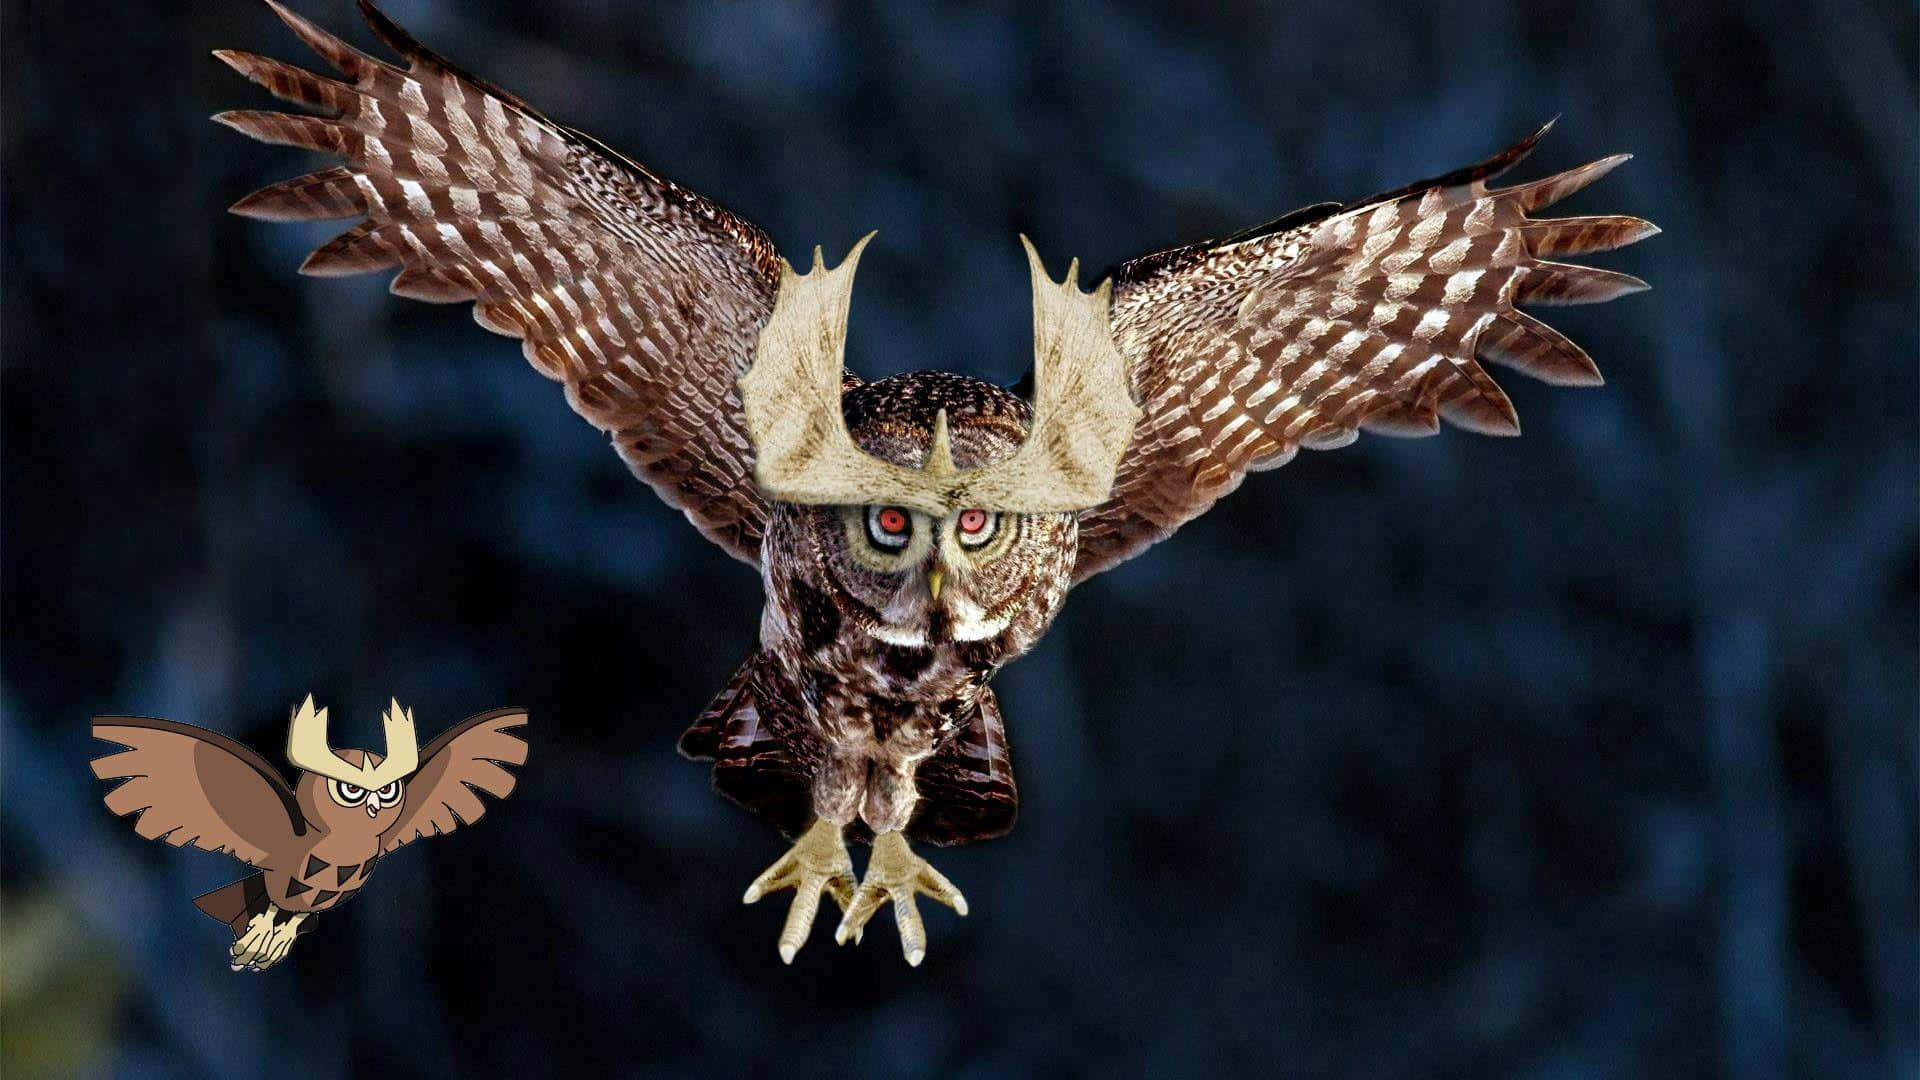 Noctowl Inspired Owl Flight Wallpaper